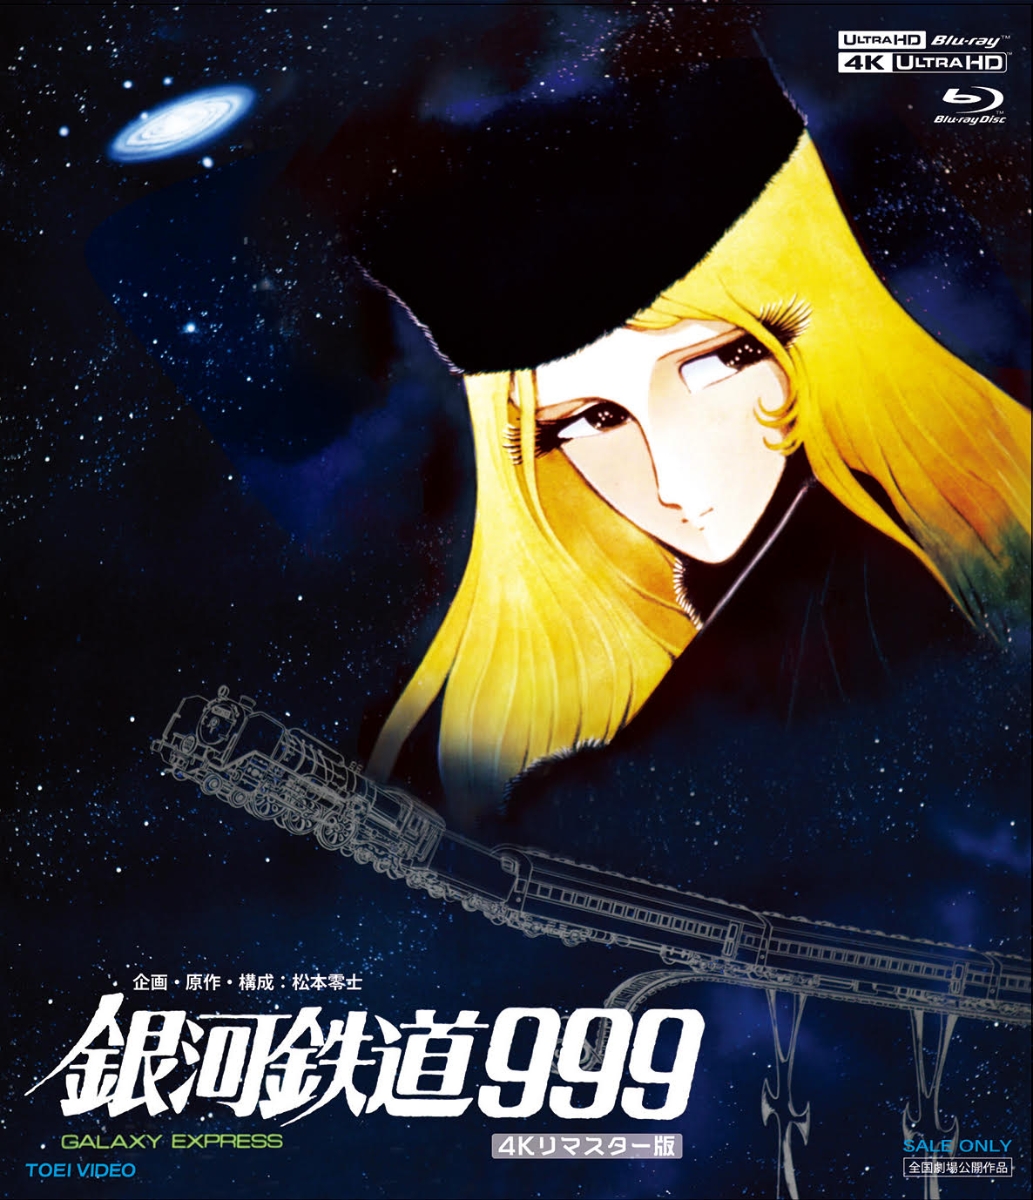 銀河鉄道999 4Kリマスター版 (4K ULTRA HD Blu-ray & Blu-ray Disc 2枚組) 【4K ULTRA HD】画像